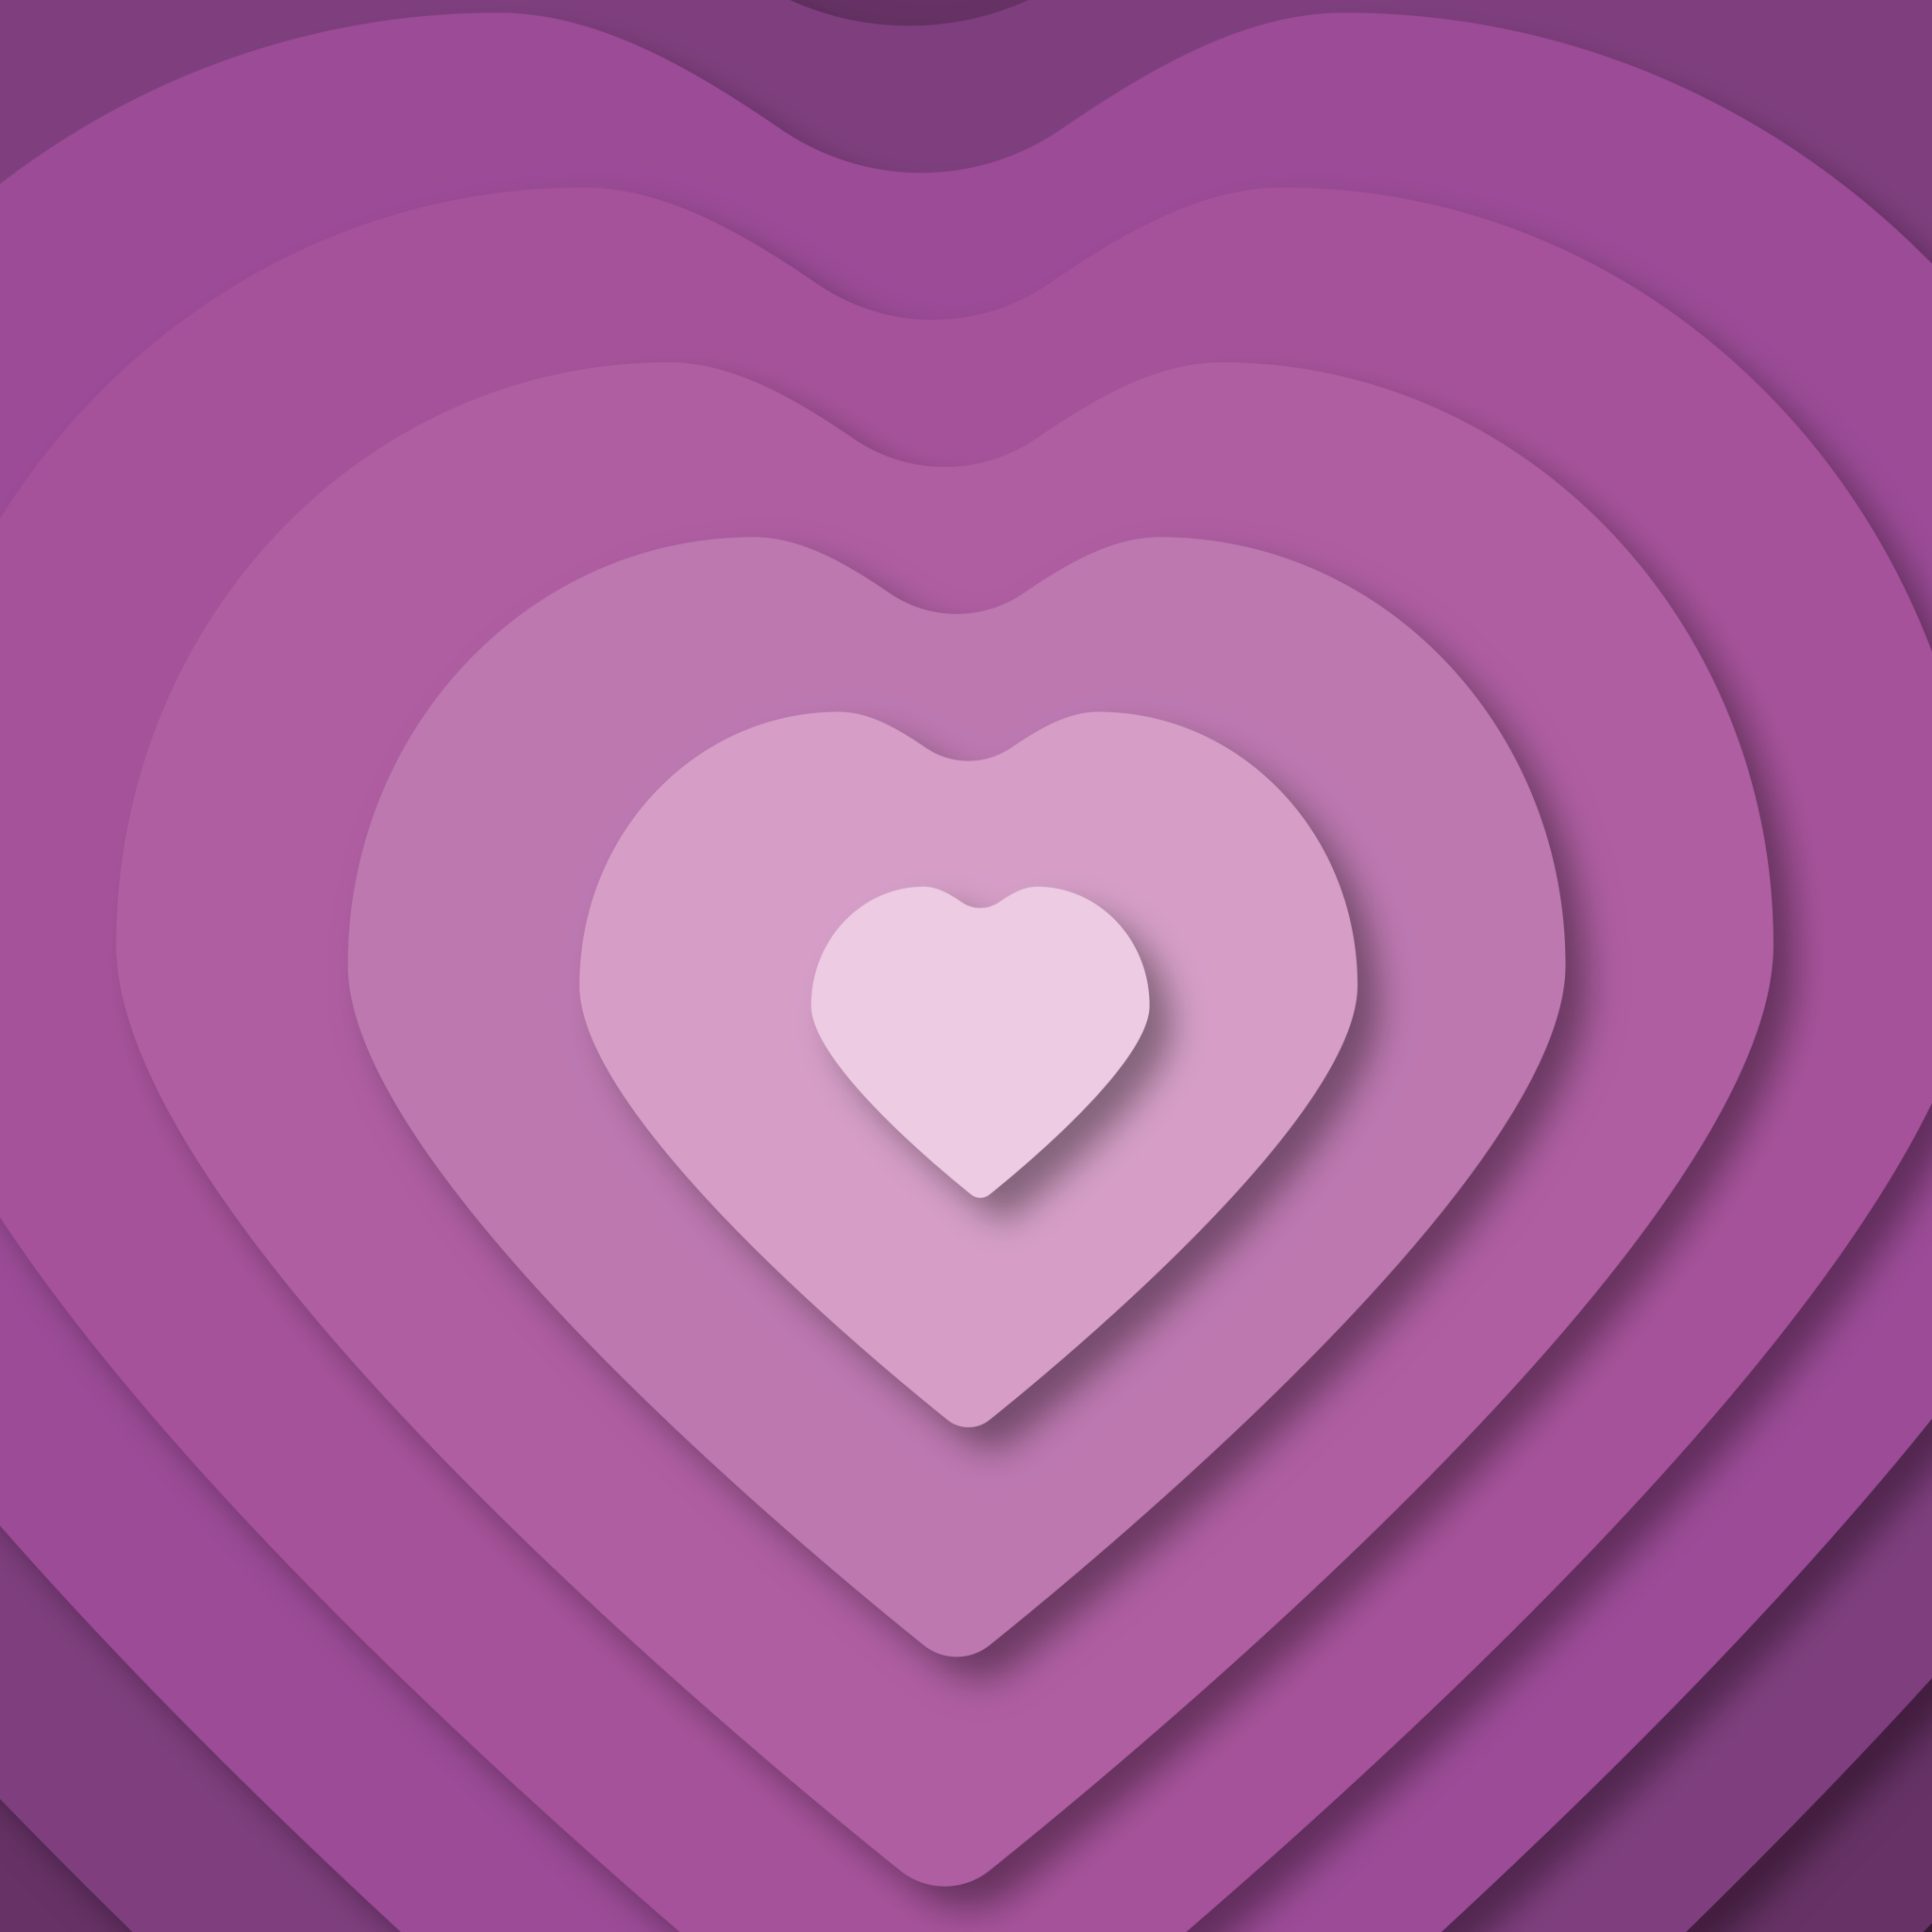 Heart Shaped Cutouts on Pink Background  Free Stock Photo